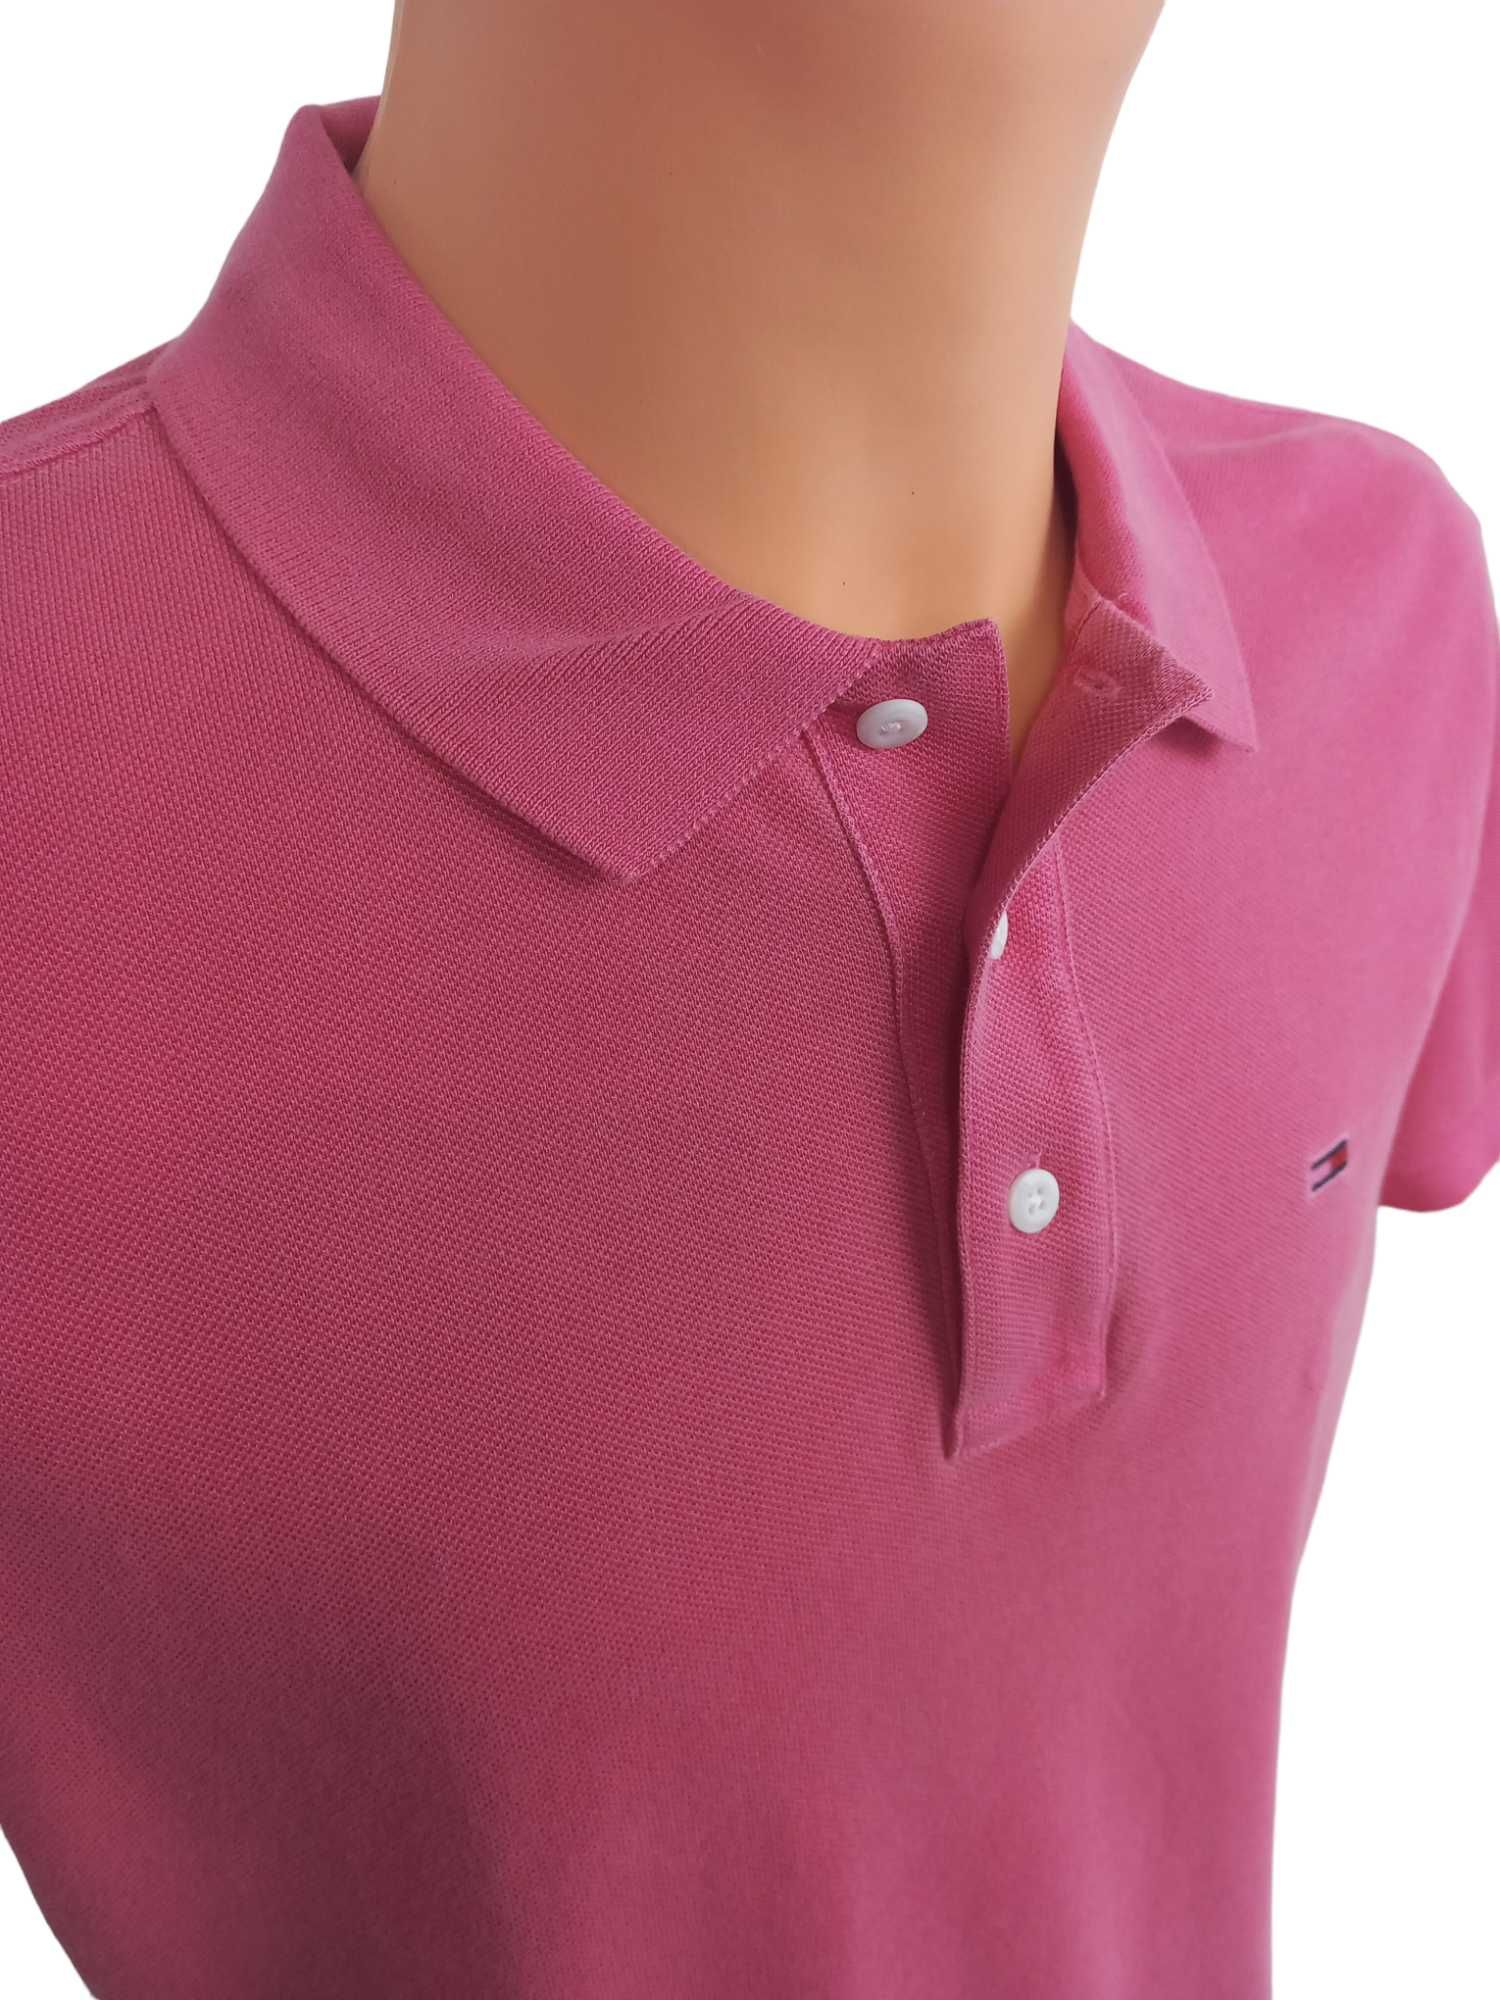 Męska koszulka polo kolor różowy marki Tommy Hilfiger roz. L